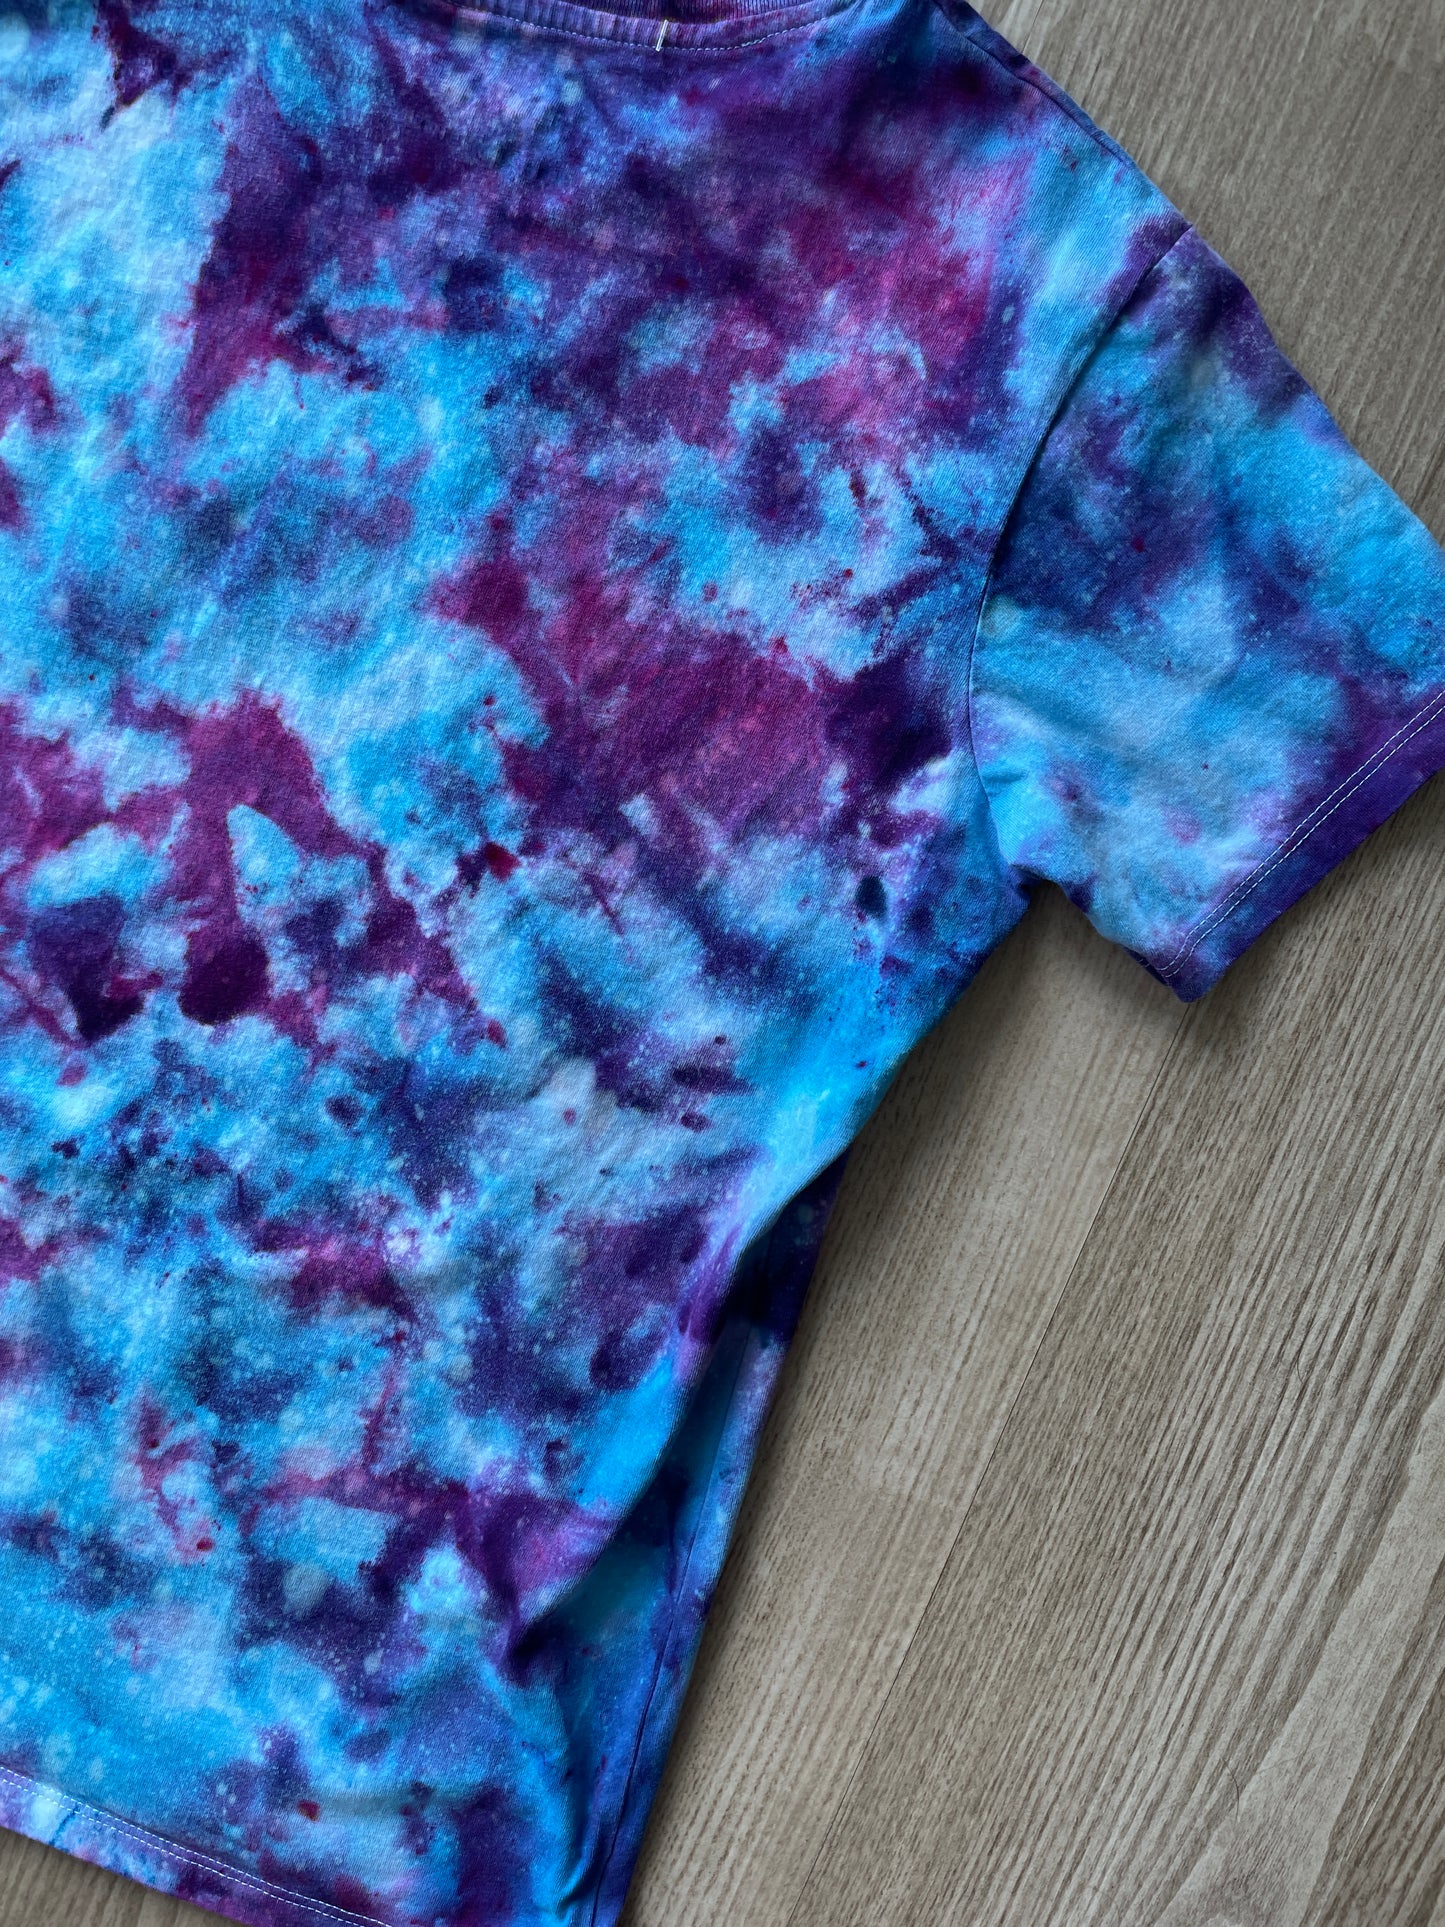 MEDIUM Women’s Cotton:On MOOD Galaxy Handmade Tie Dye T-Shirt | One-Of-a-Kind Blue and Purple Short Sleeve